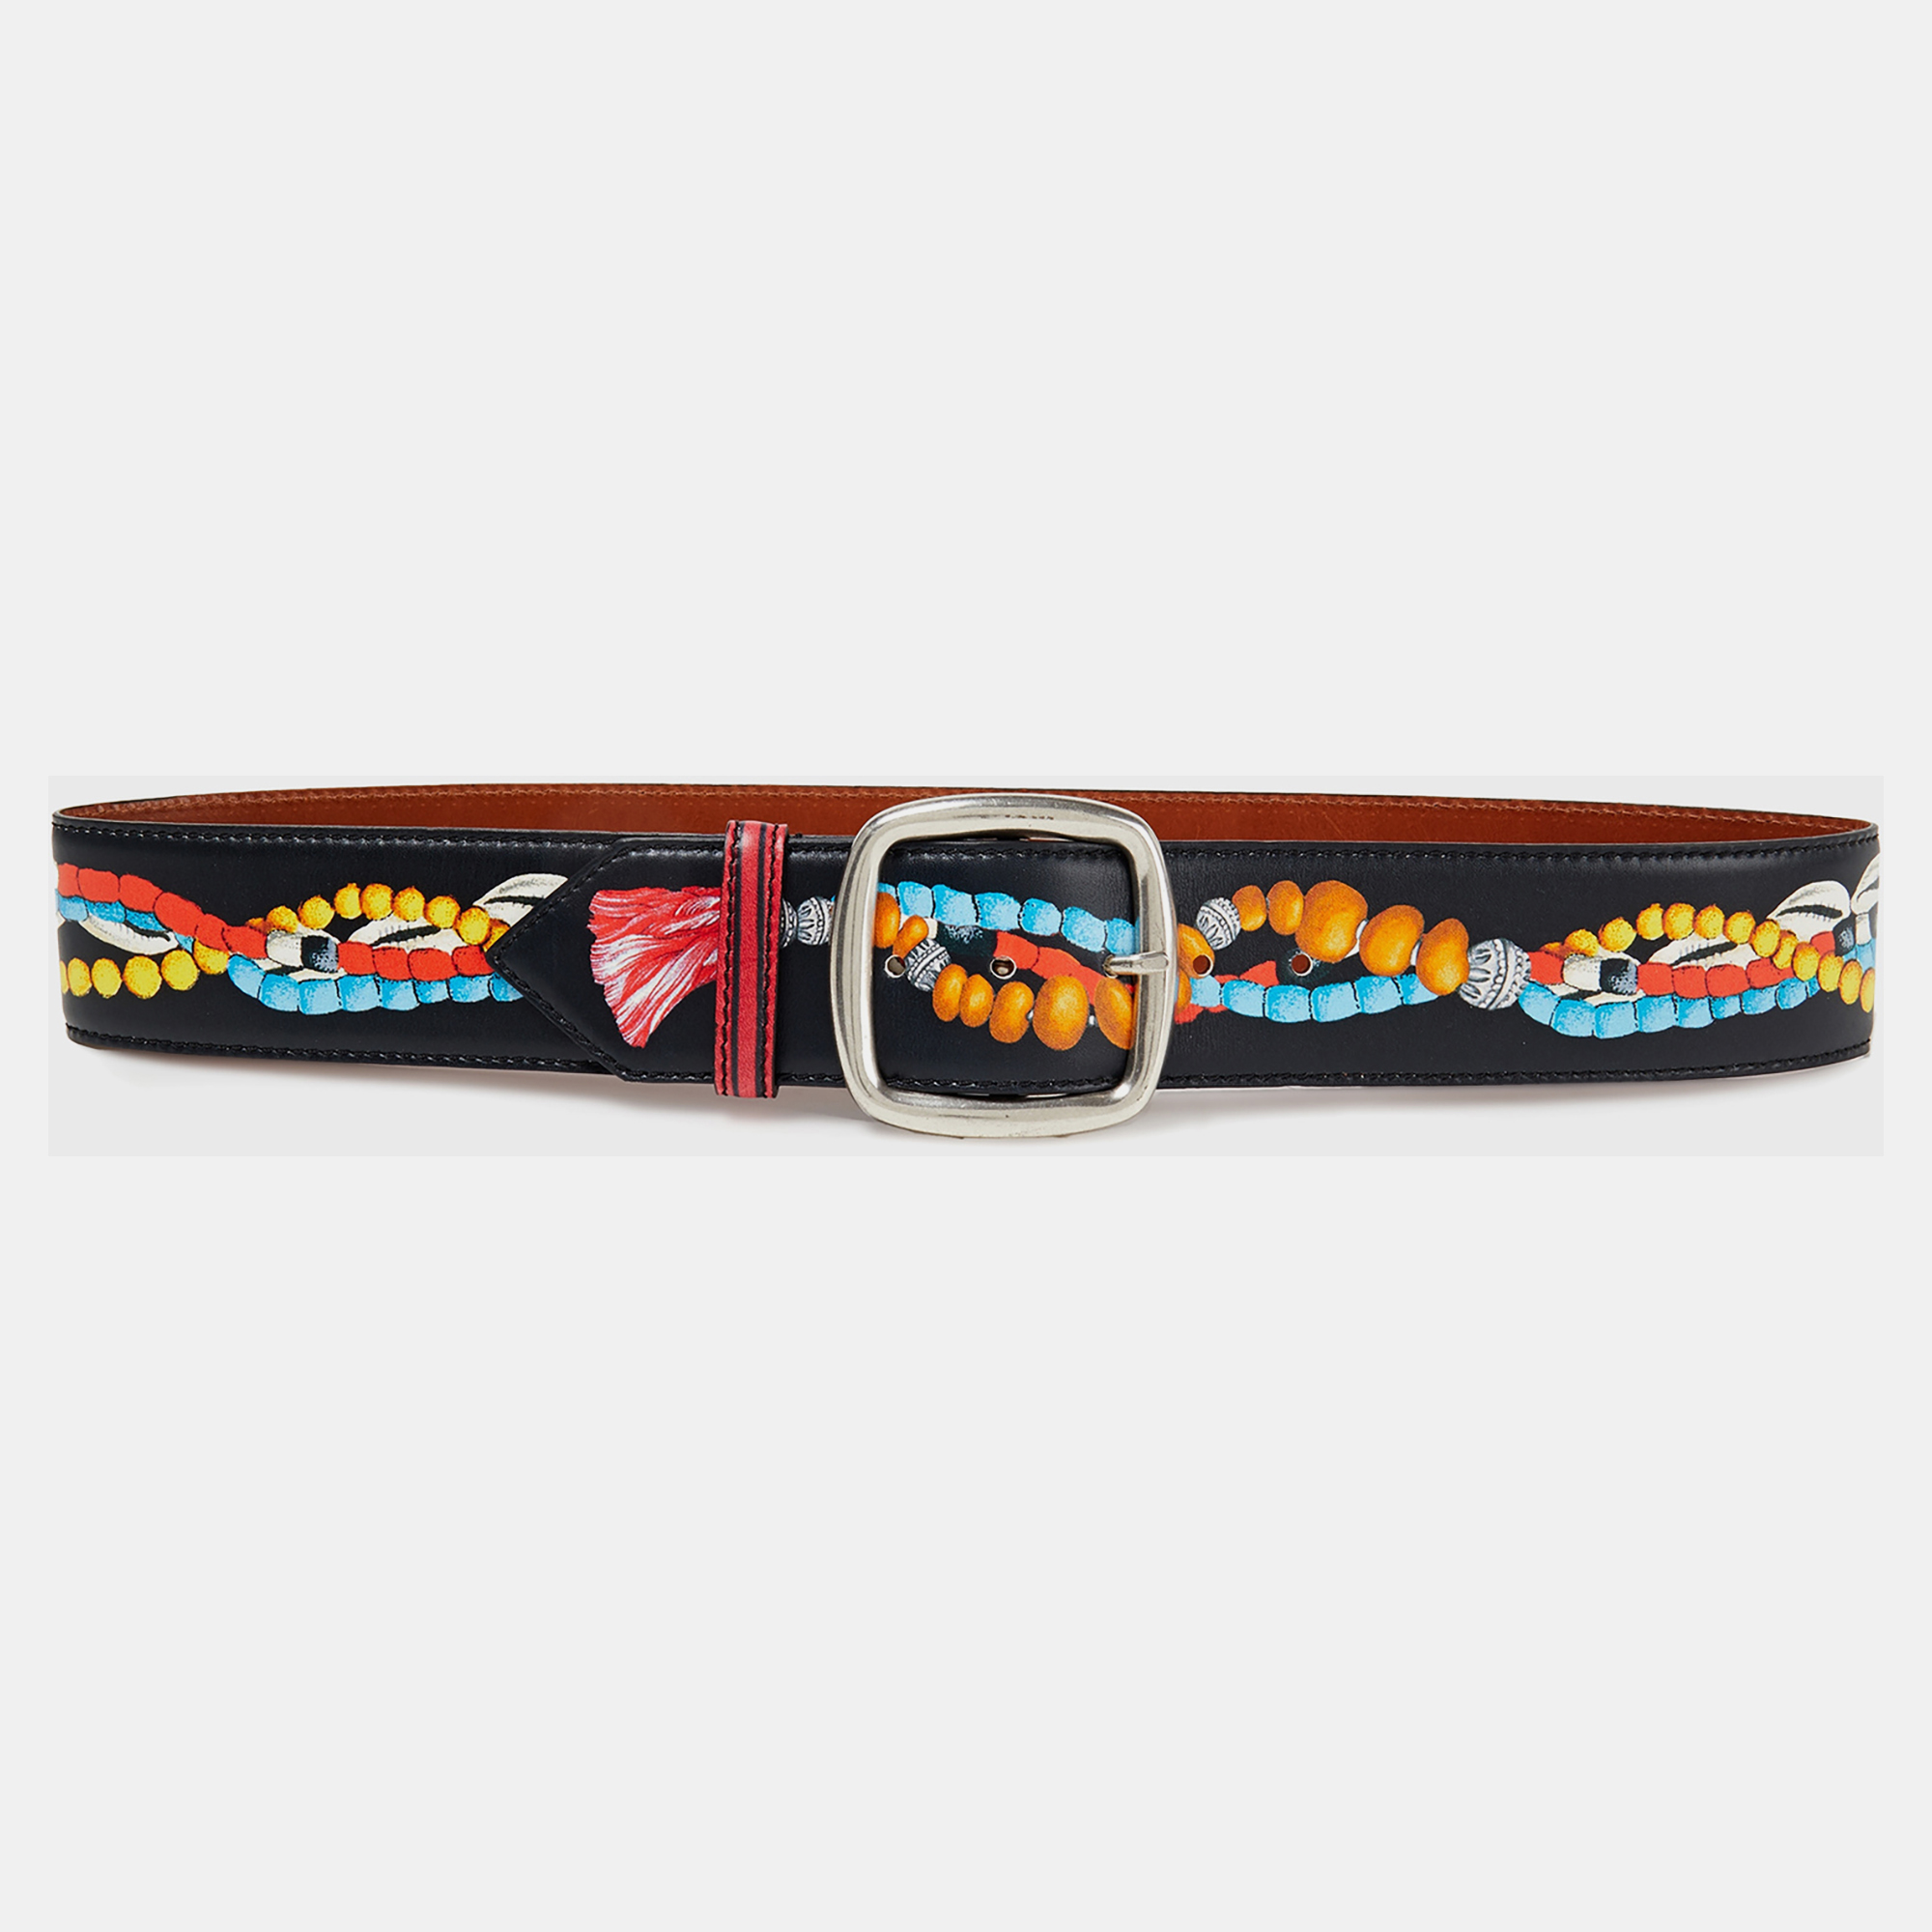 Etro printed leather belt 75 cm